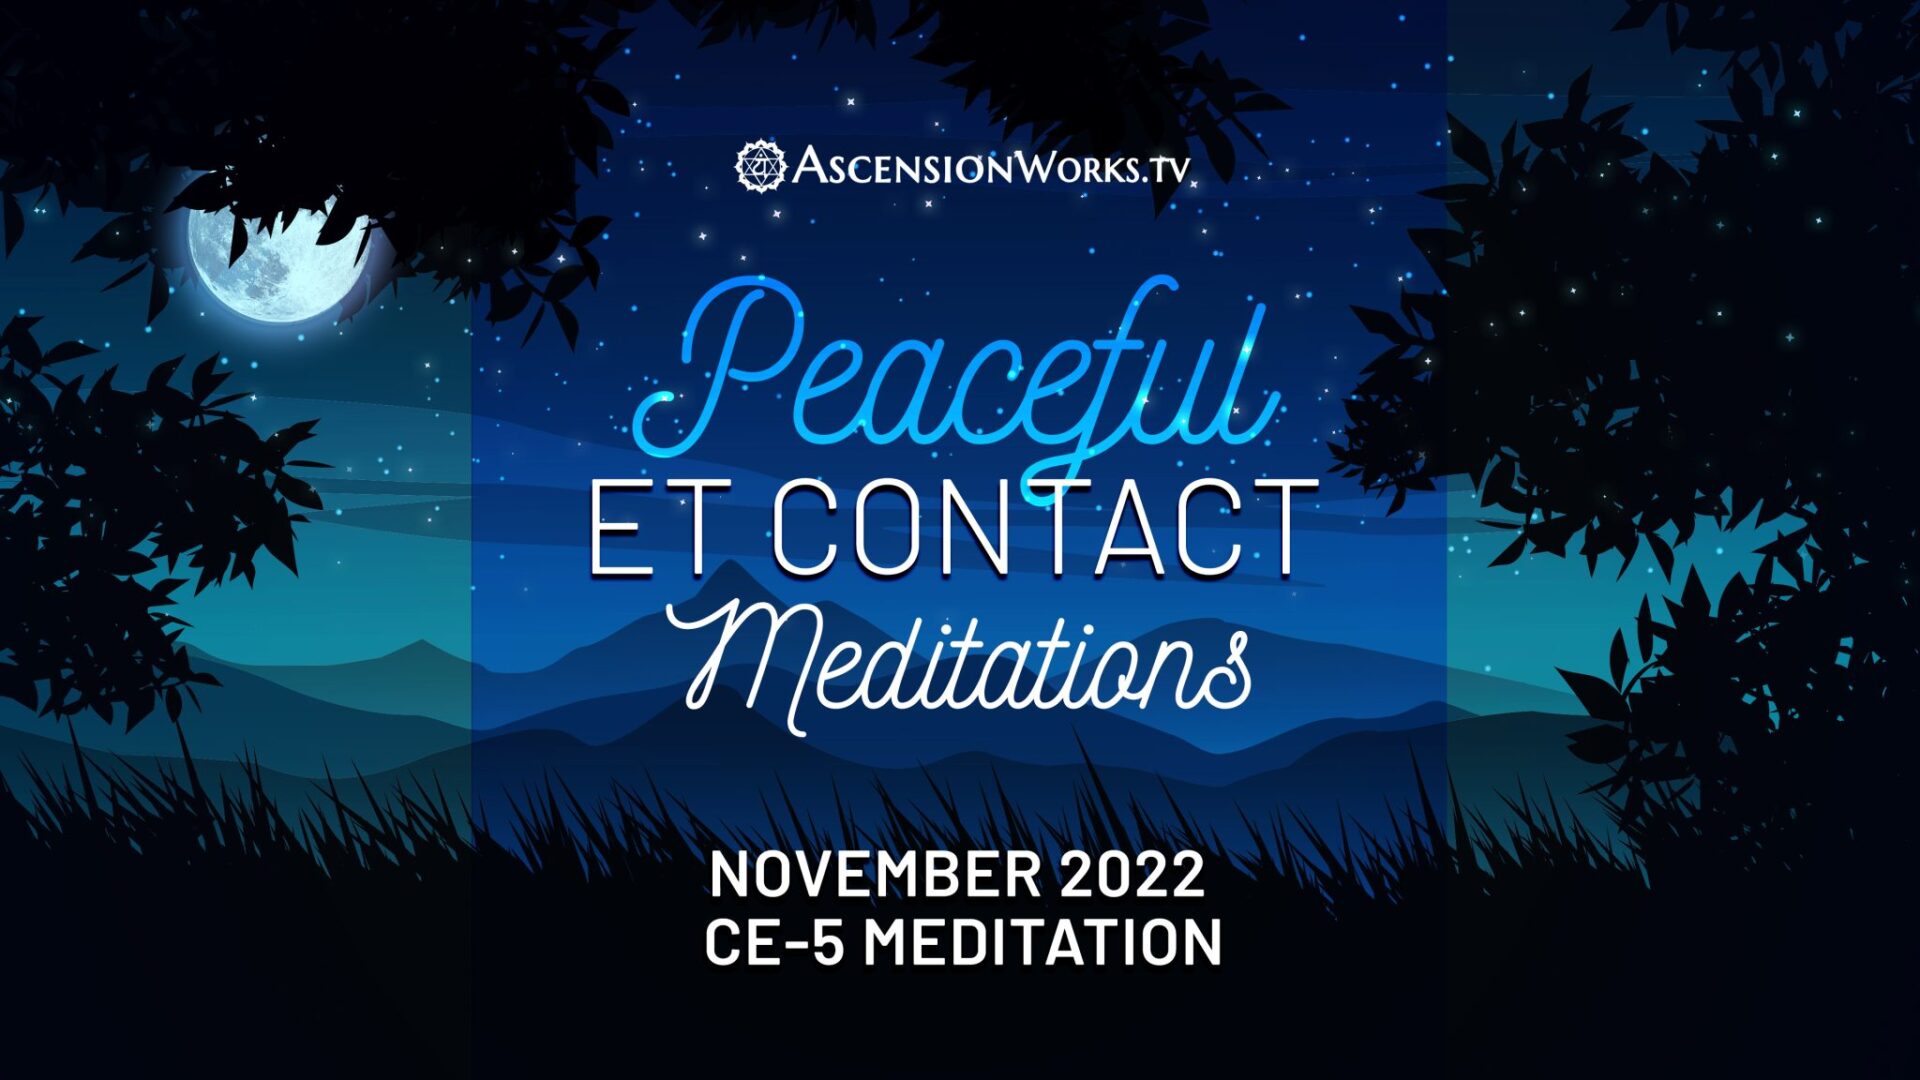 November 2022 CE-5 Meditation, Peaceful ET Contact Meditations